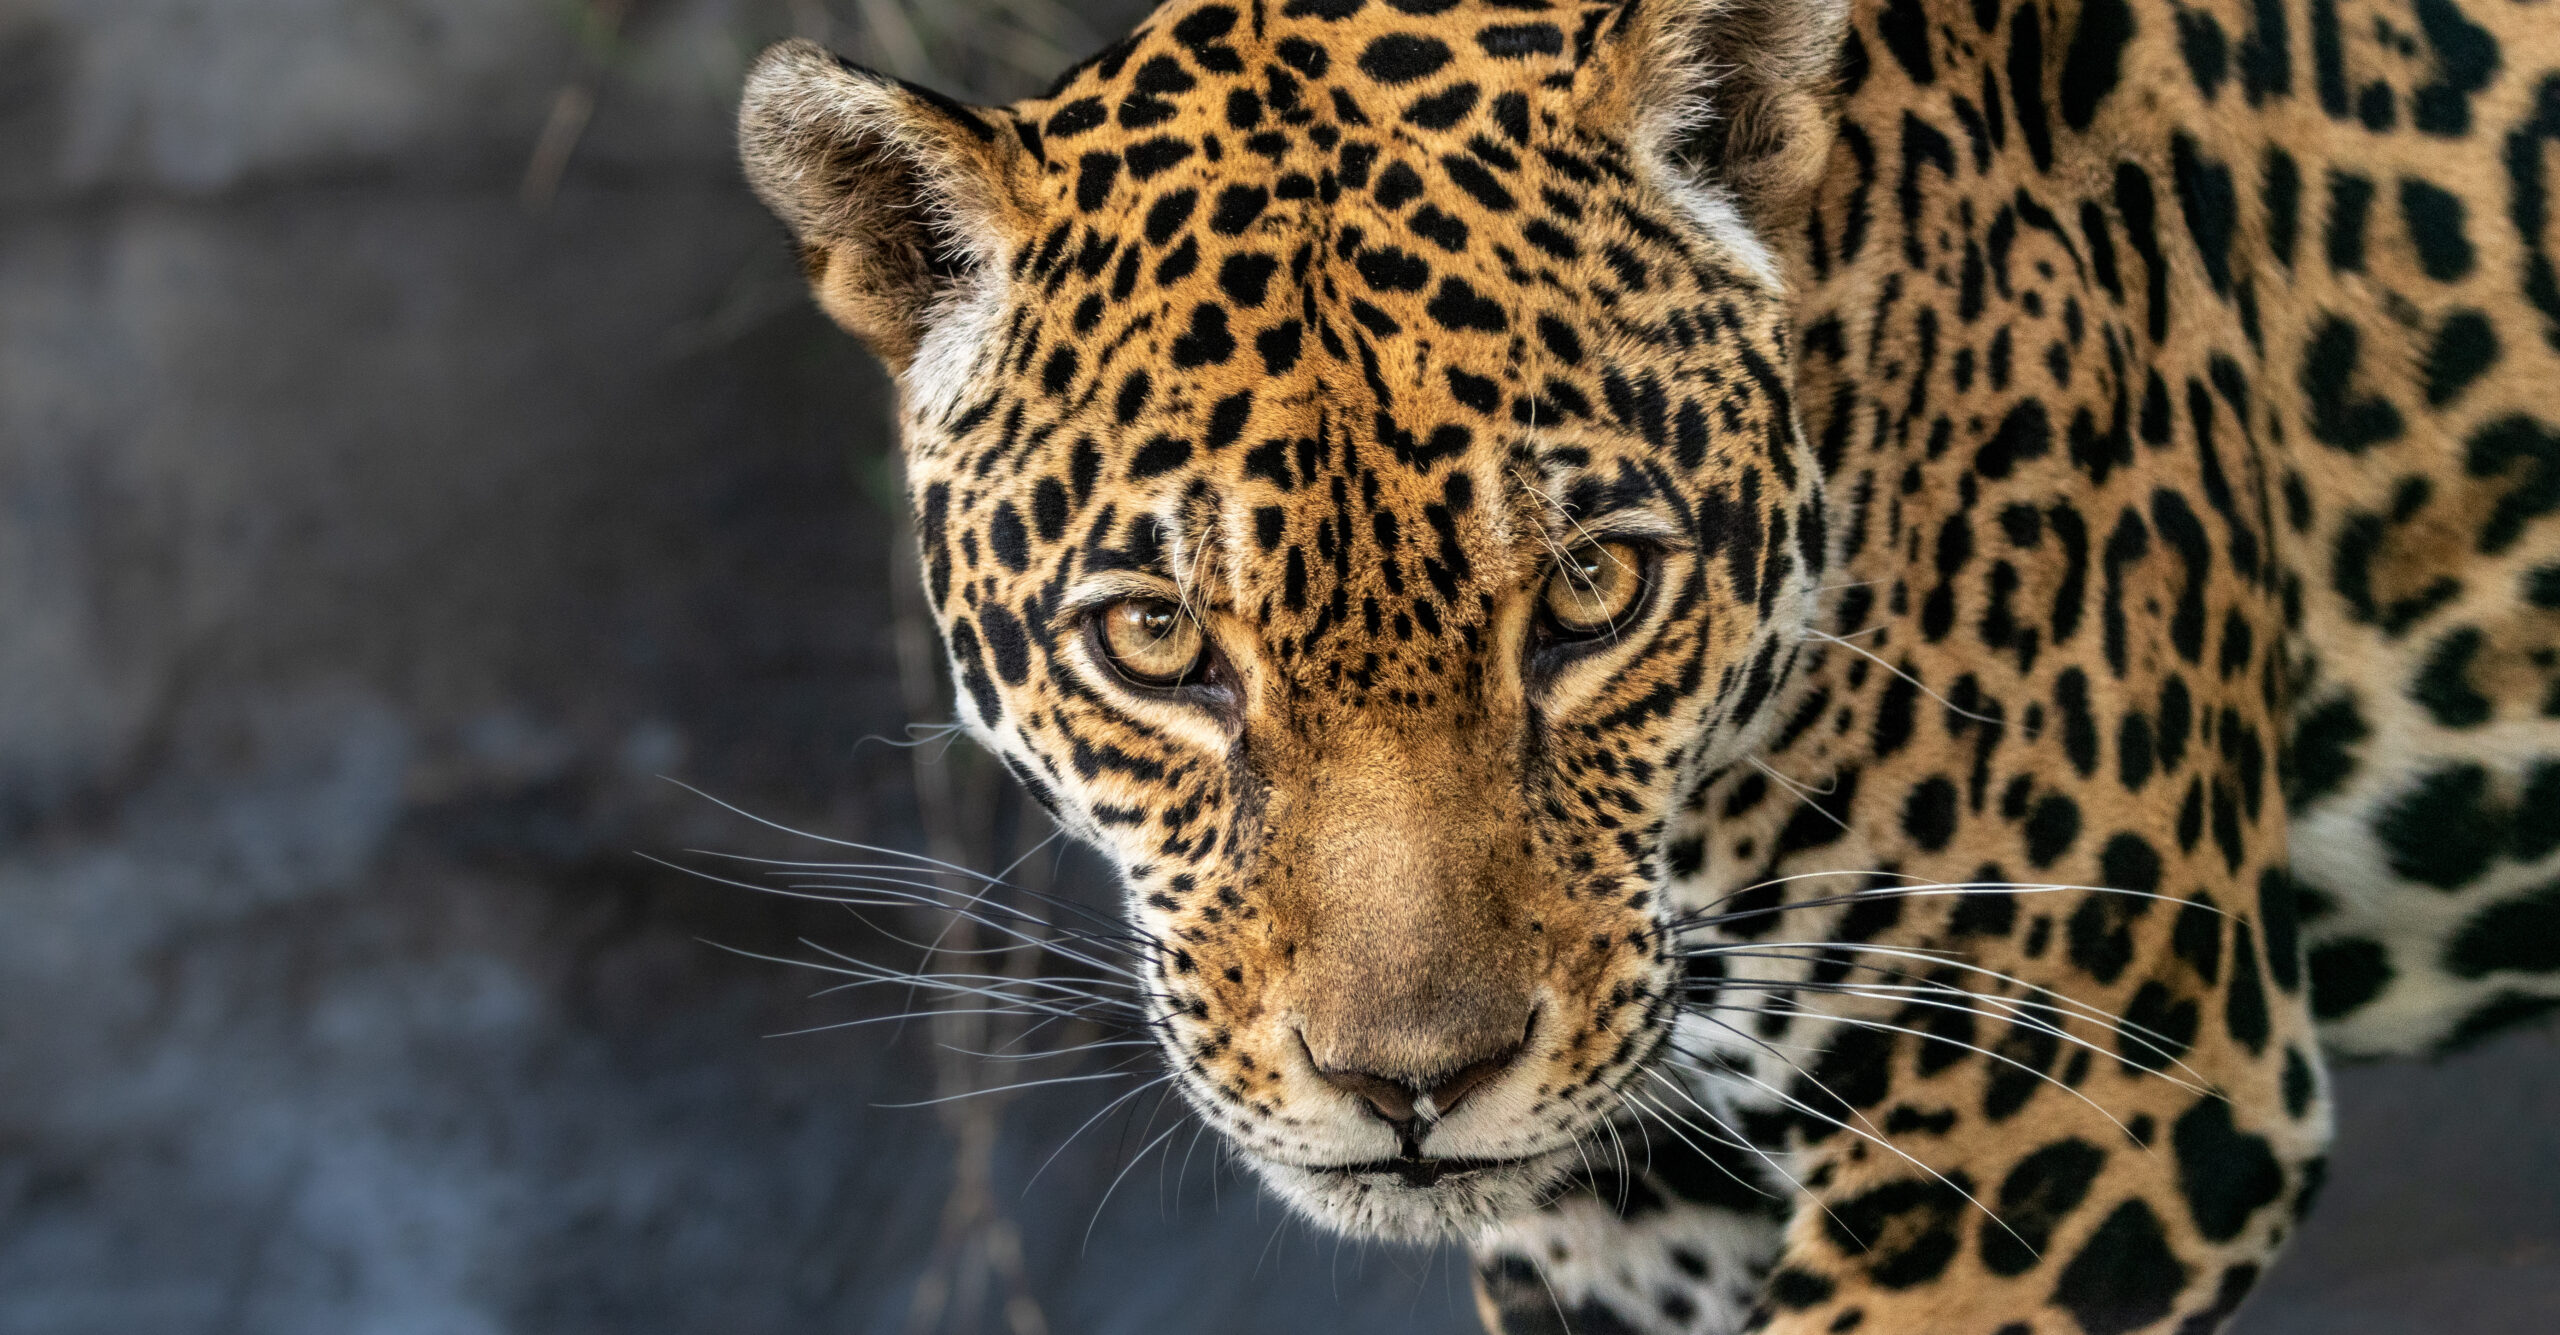 jaguars are common mascots